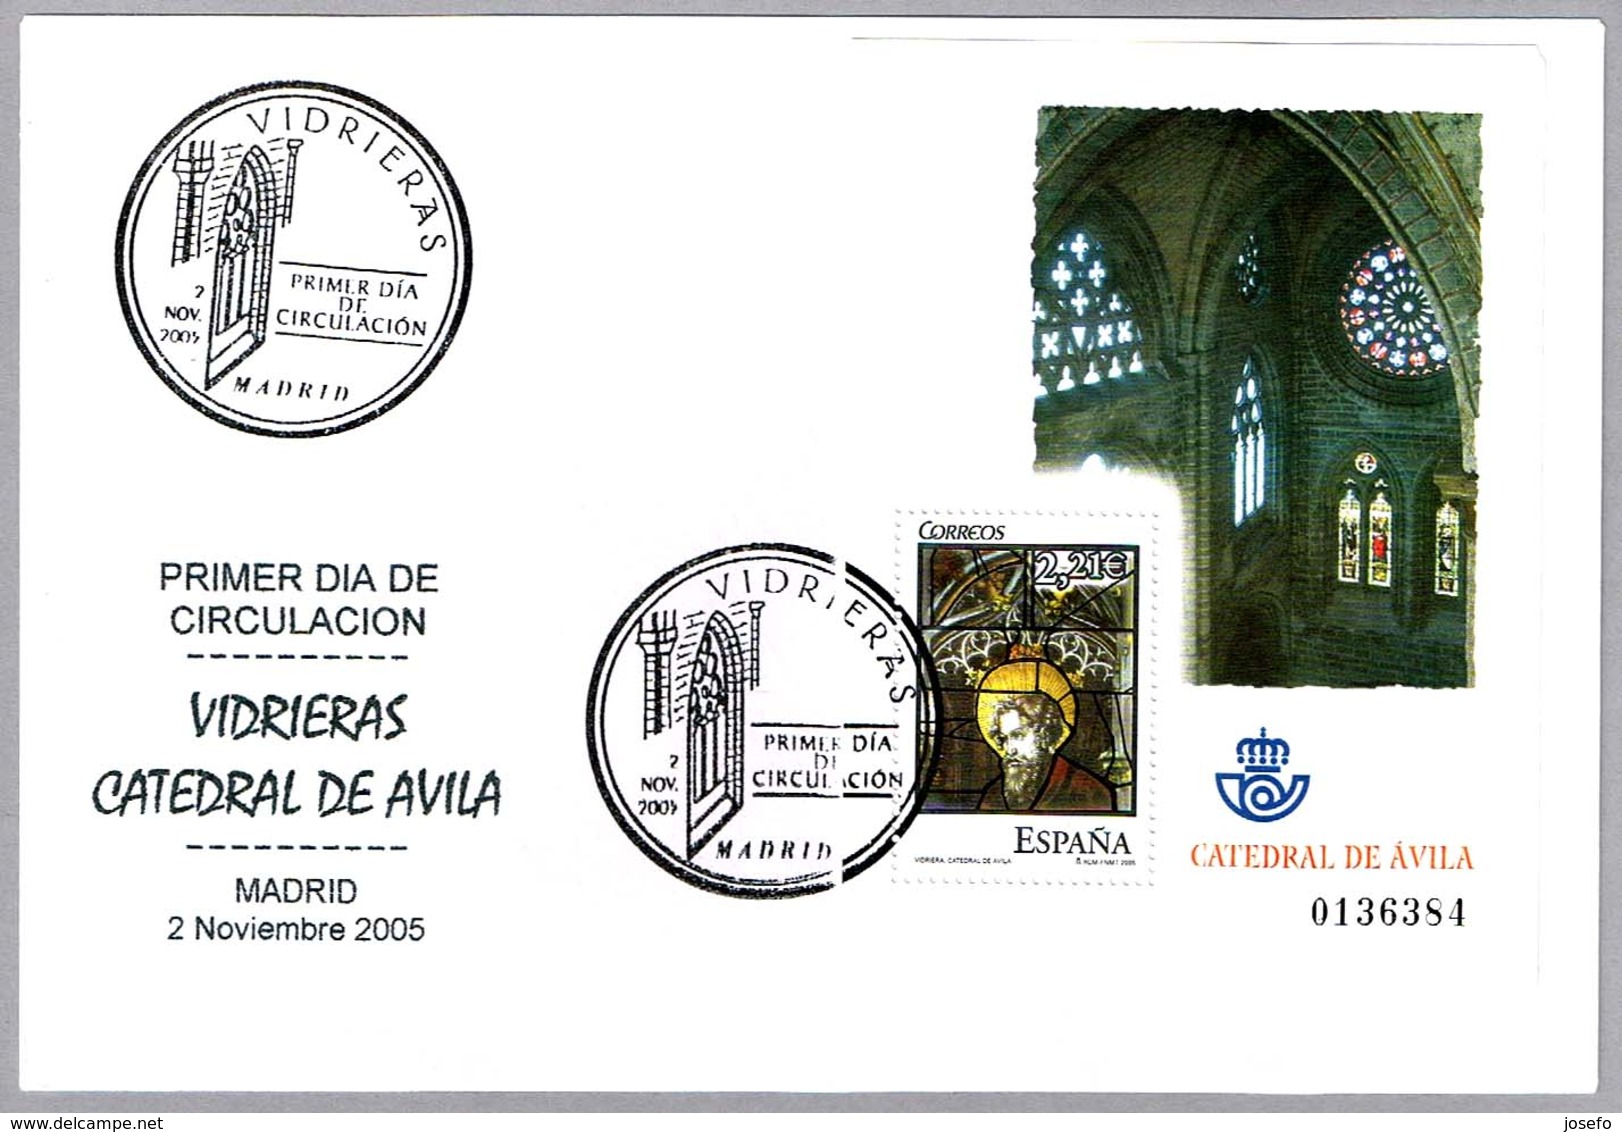 VIDRIERAS DE LA CATEDRAL DE AVILA - Stained Glass In The Cathedral Of Ávila. SPD/FDC Madrid 2005 - Verres & Vitraux